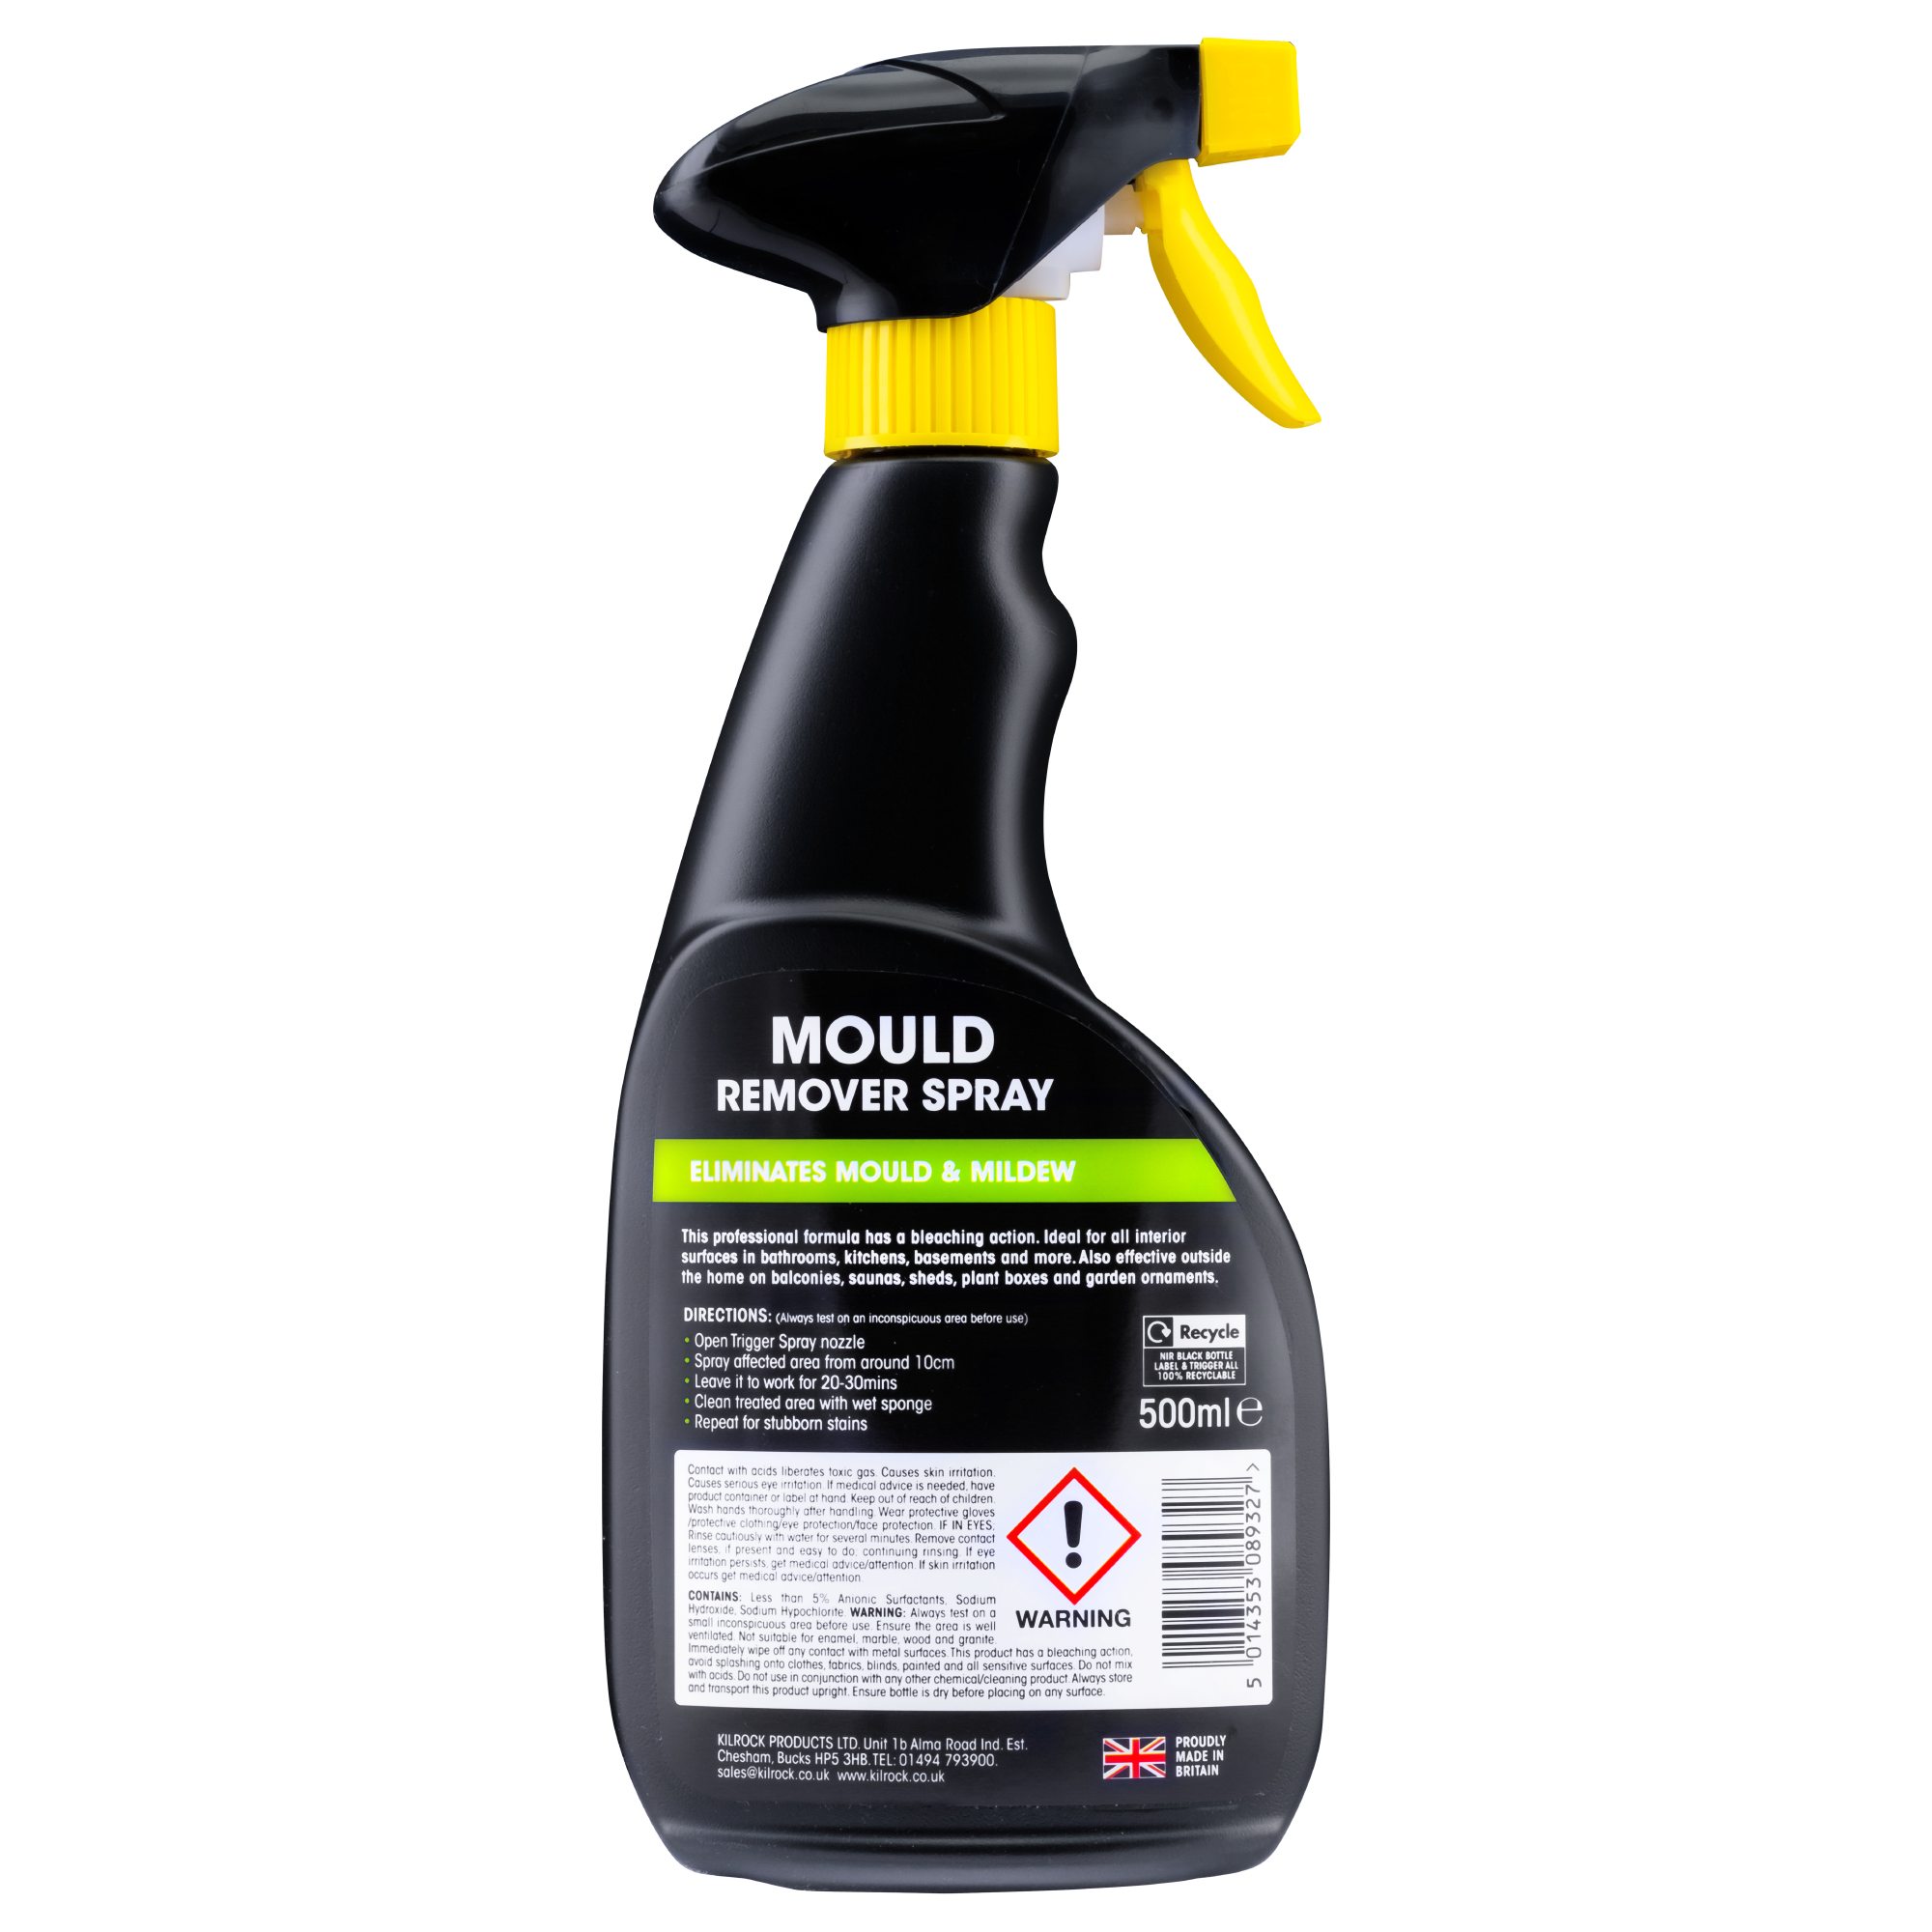 Kilrock Mould Remover Spray 500ml-02.png